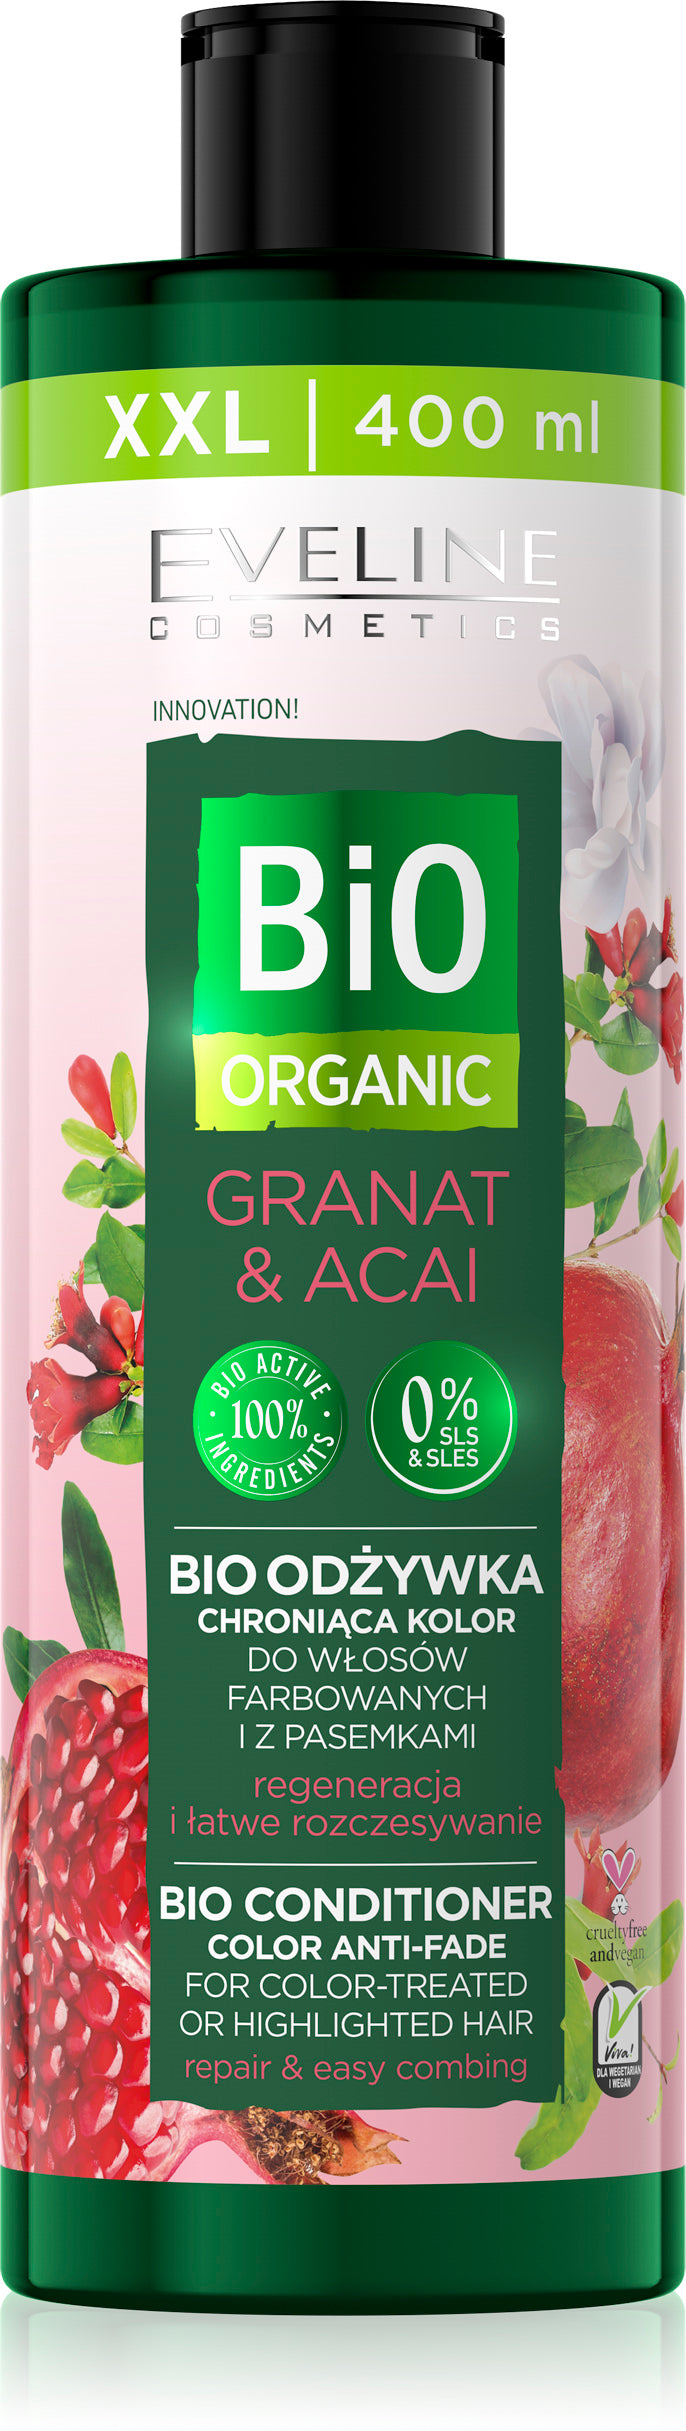 Eveline Bio organic Hair balzam - granat&acai 400ml